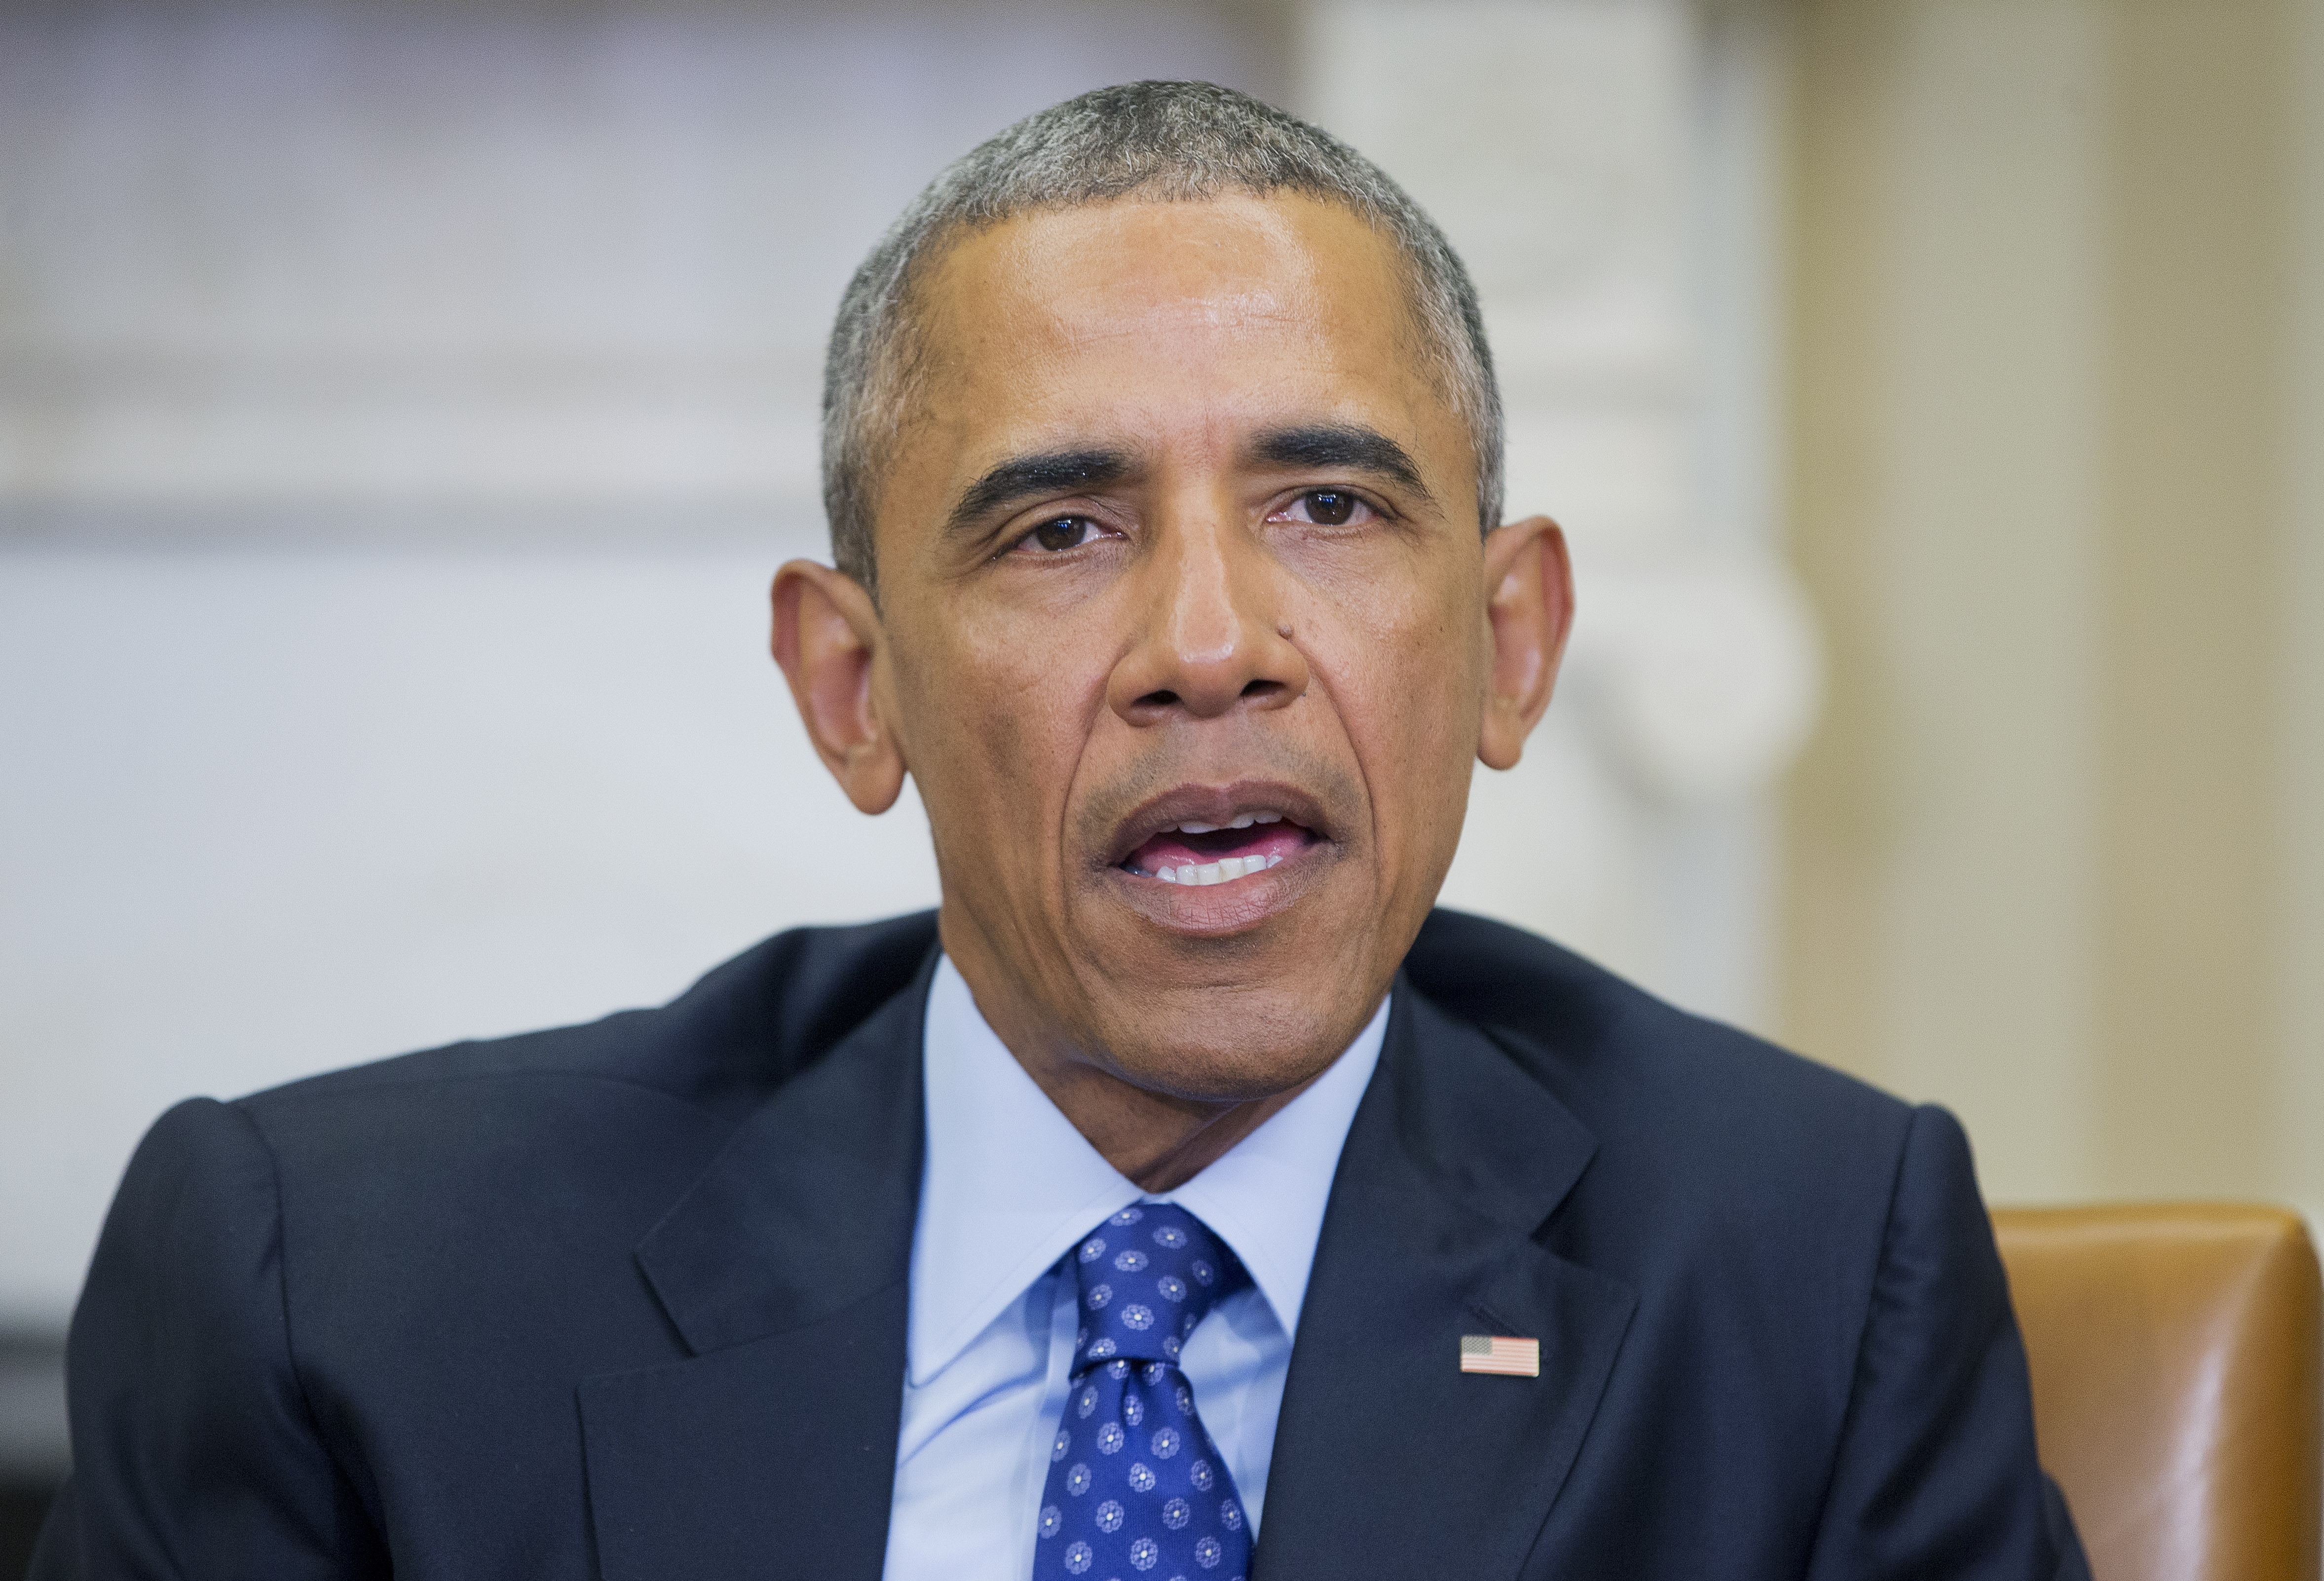 Barack Obama speaks in the Oval Office in Washington, D.C. on Jan. 4, 2016. (Pablo Martinez Monsivais—AP)